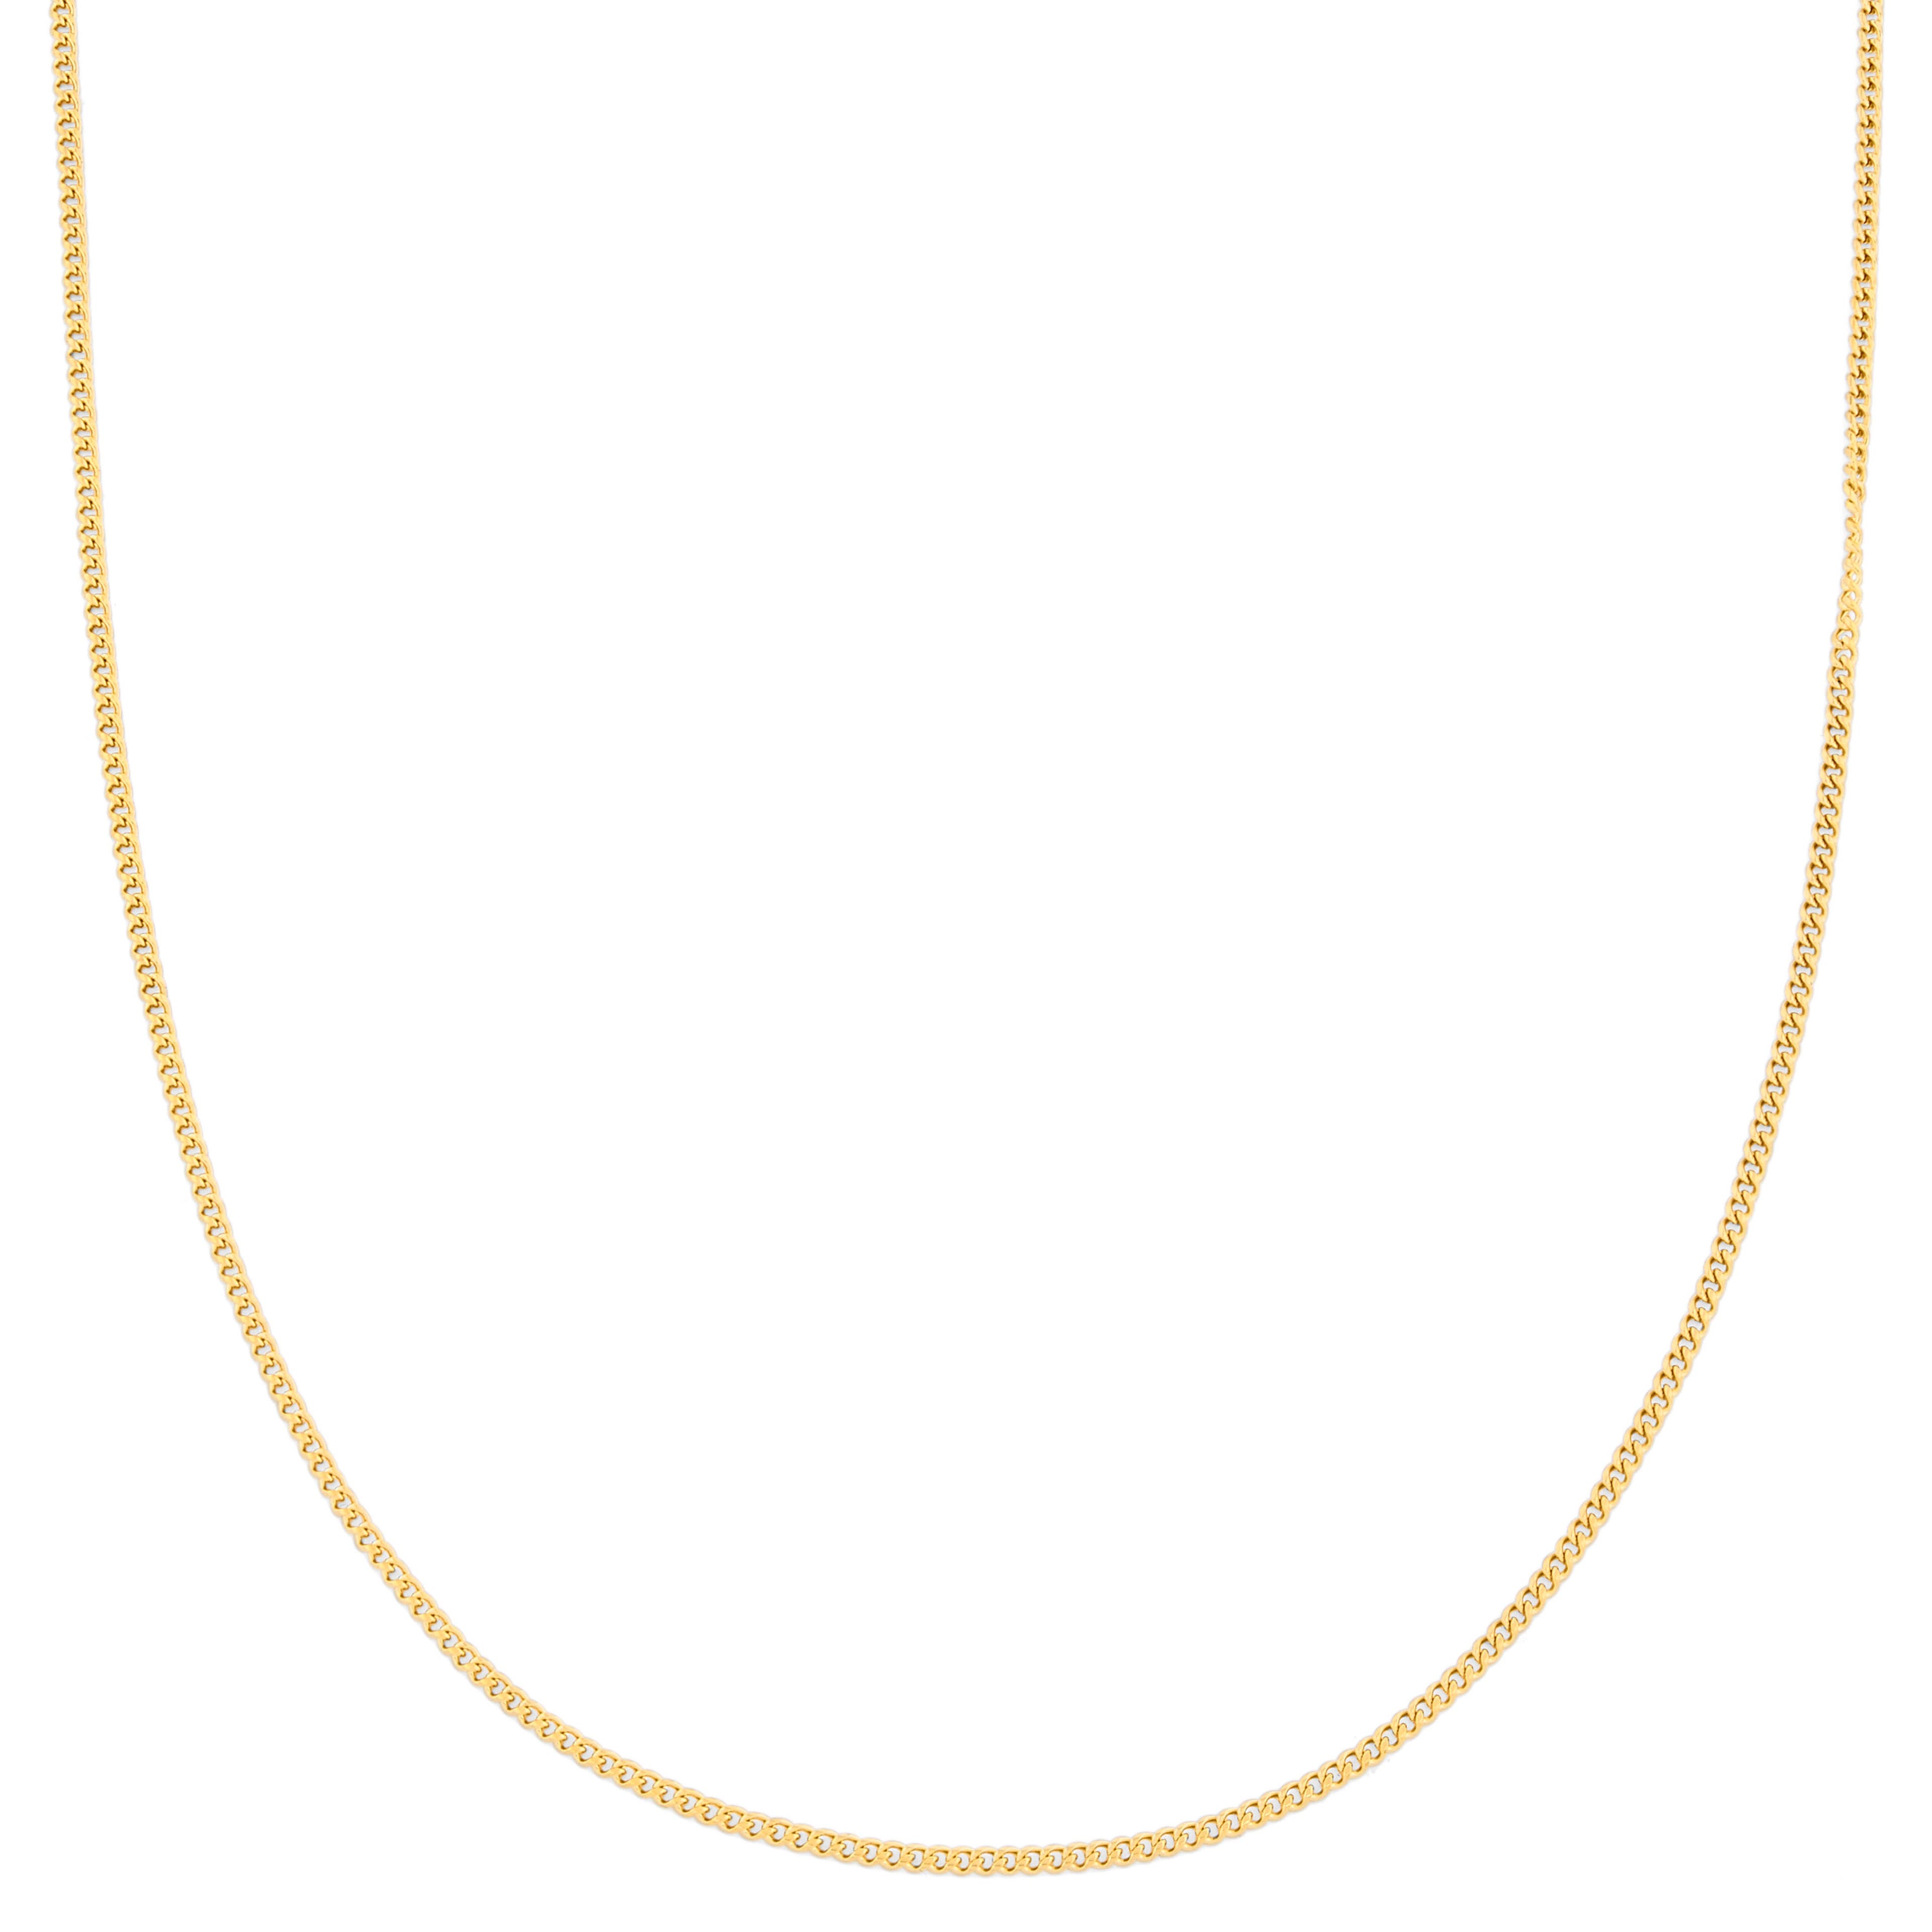 Goldfarbene Ketten Halskette 2mm 